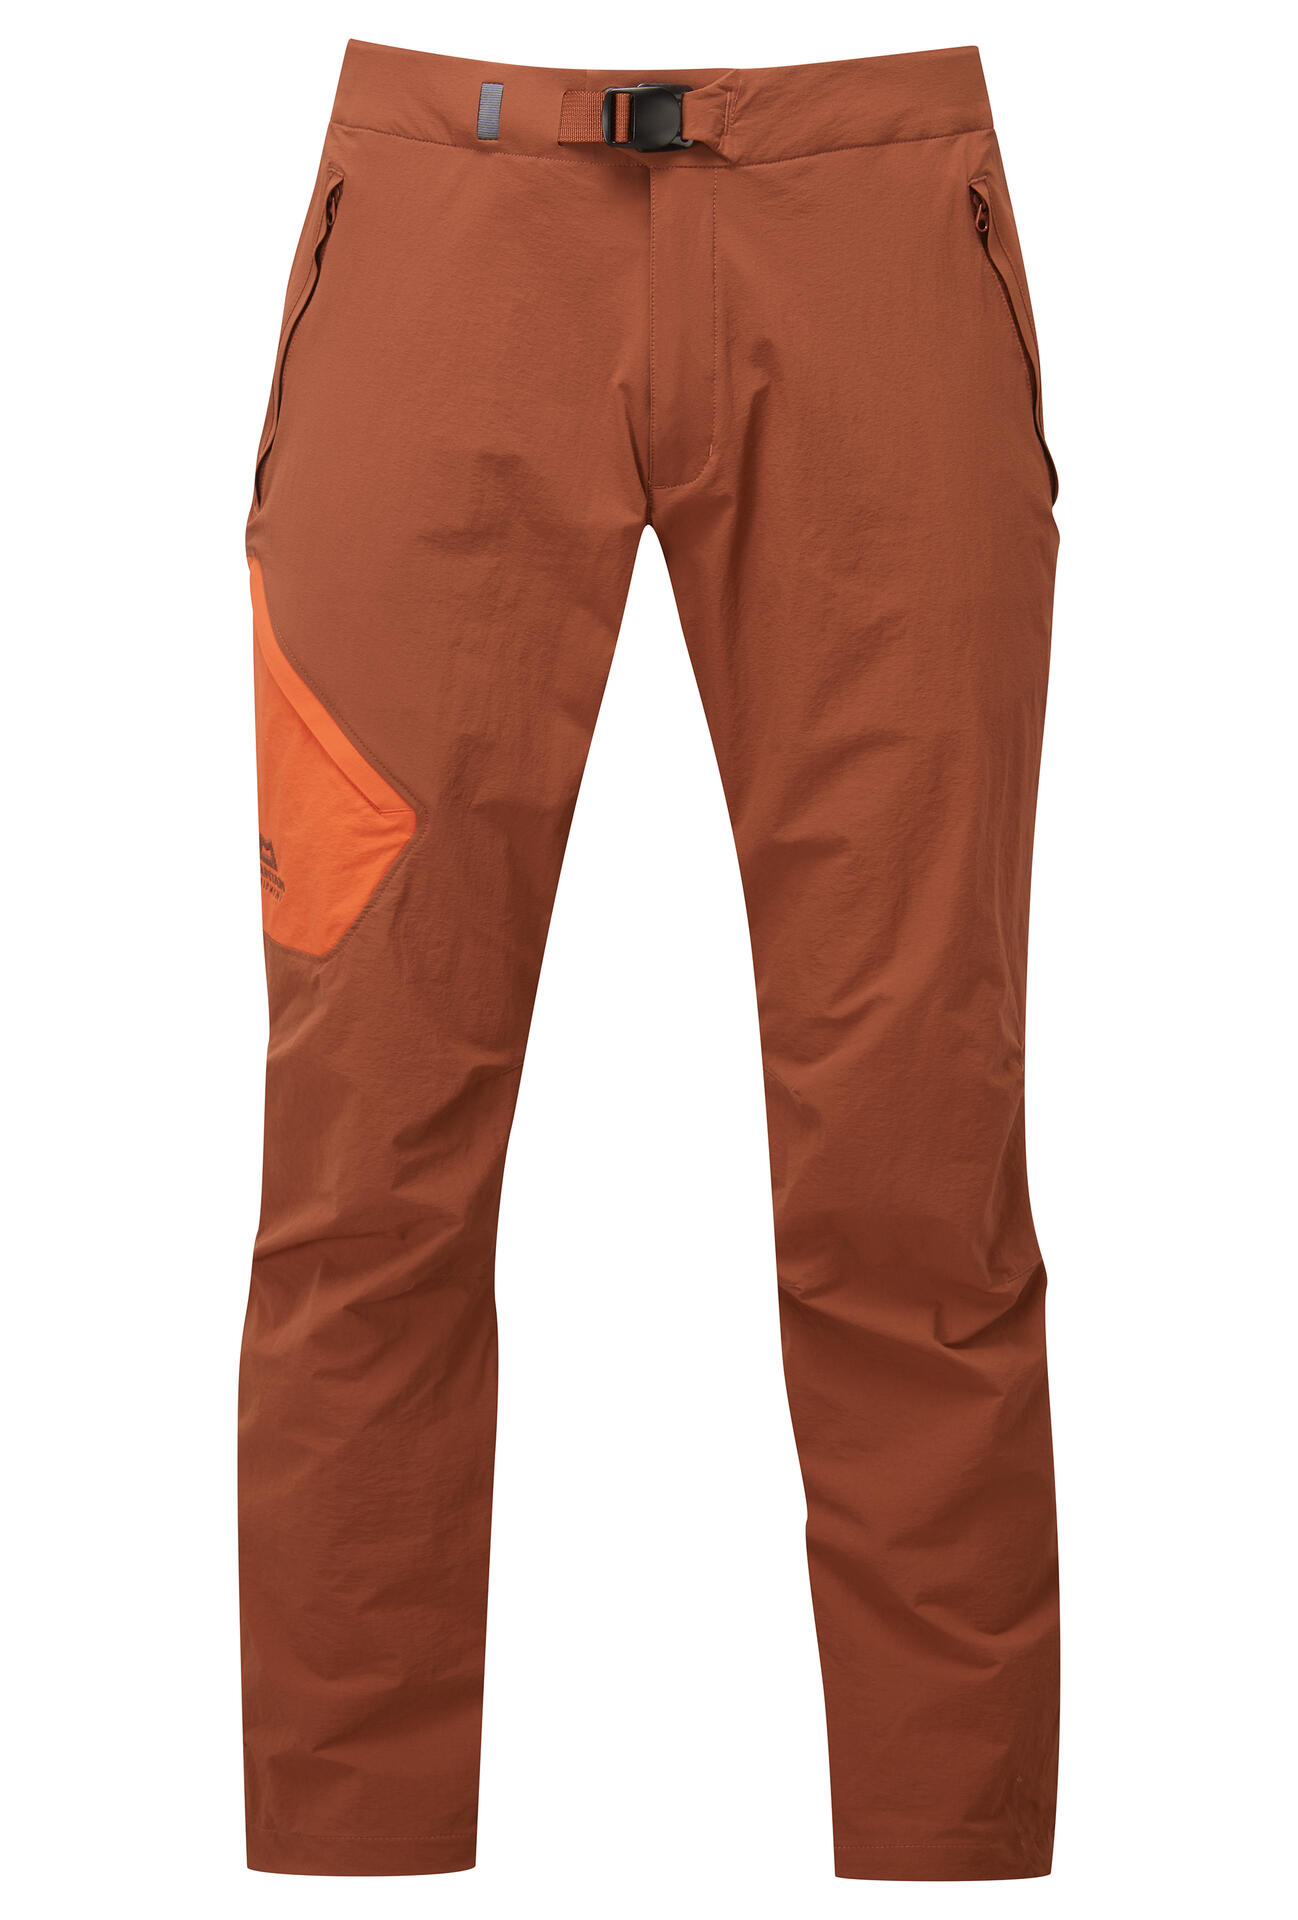 Mountain Equipment Comici Pant (Ac) Men'S - prodloužené nohavice Barva: Burnt Henna/Cardinal Orange, Velikost: L